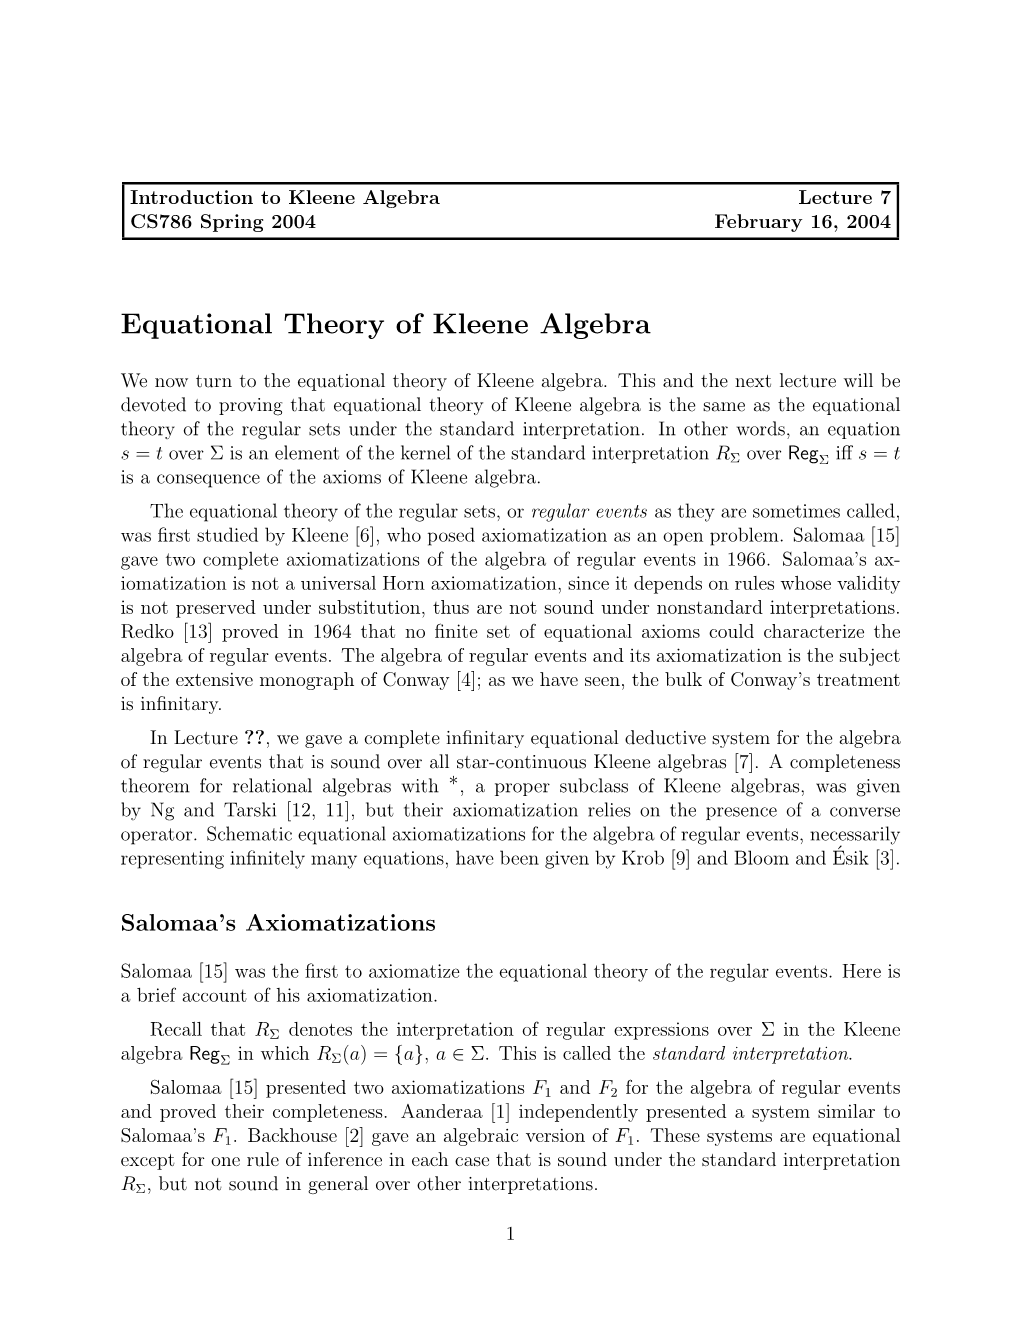 Equational Theory of Kleene Algebra